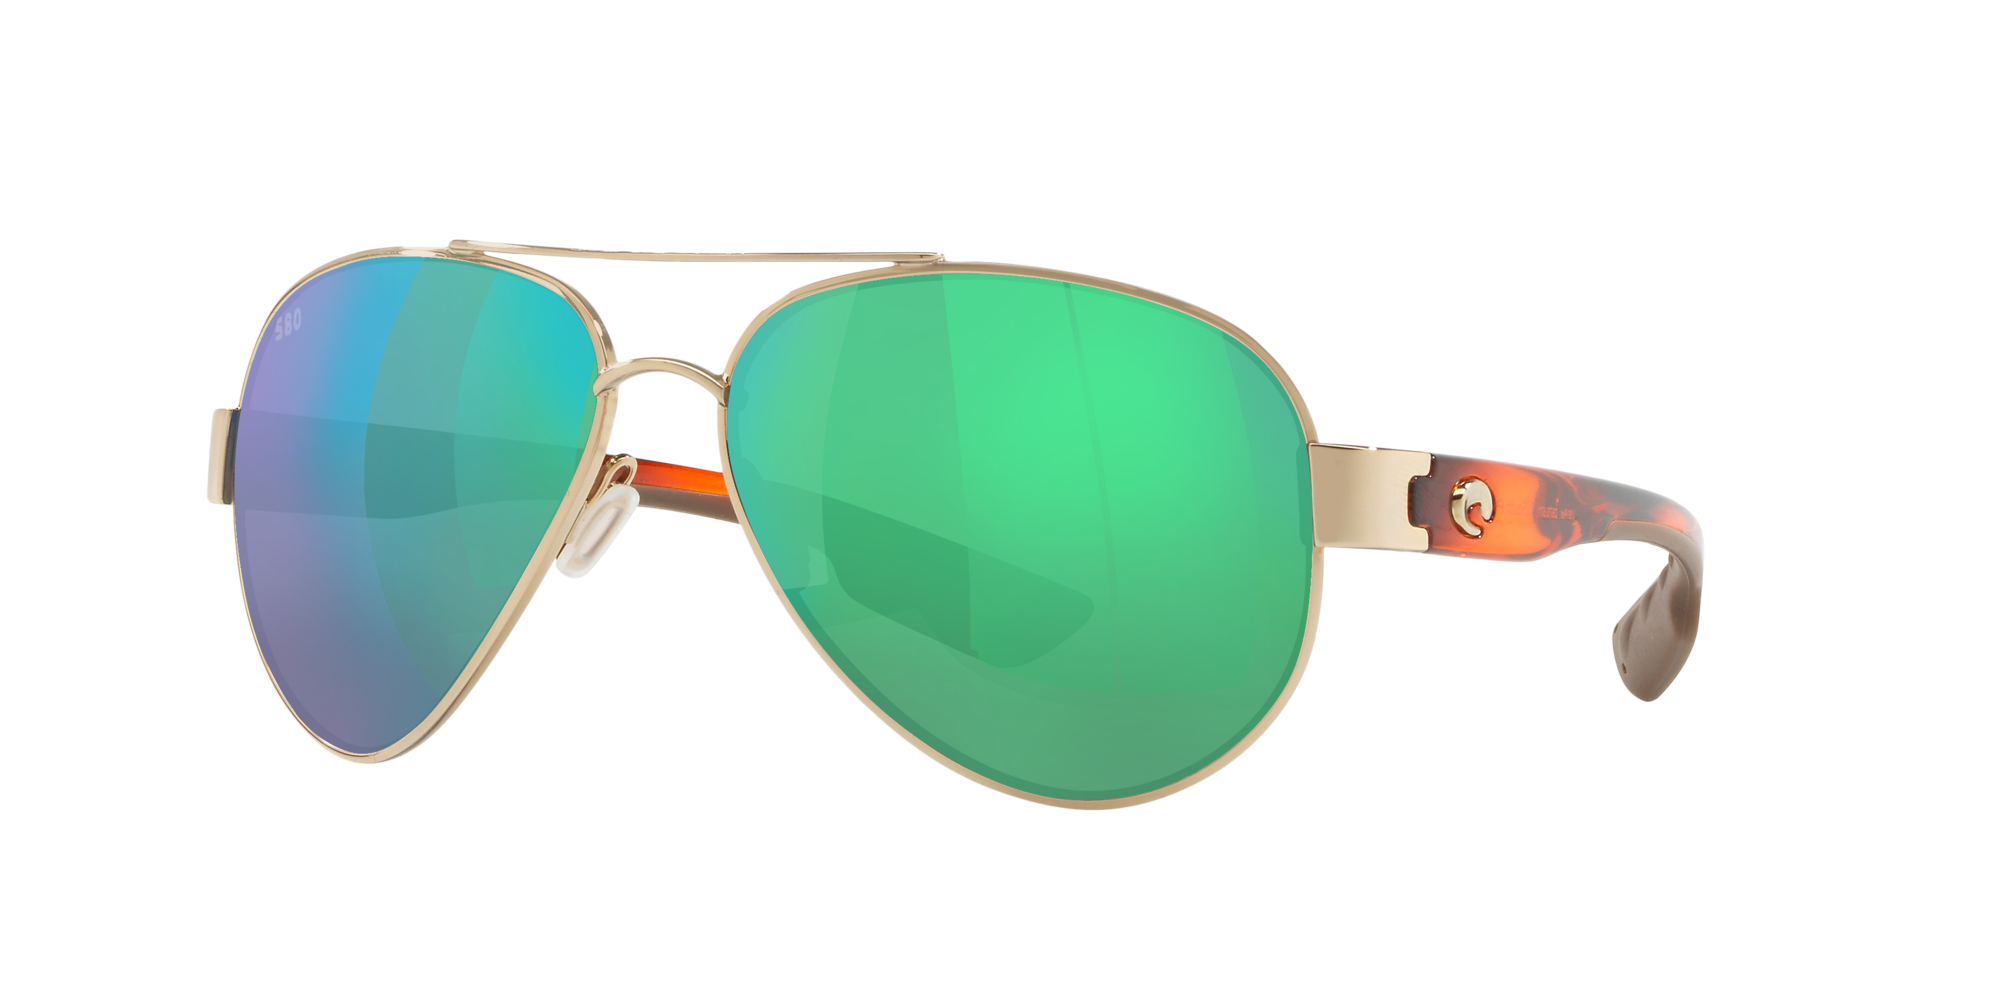 Aviator Sunglasses at Bikers Eyewear